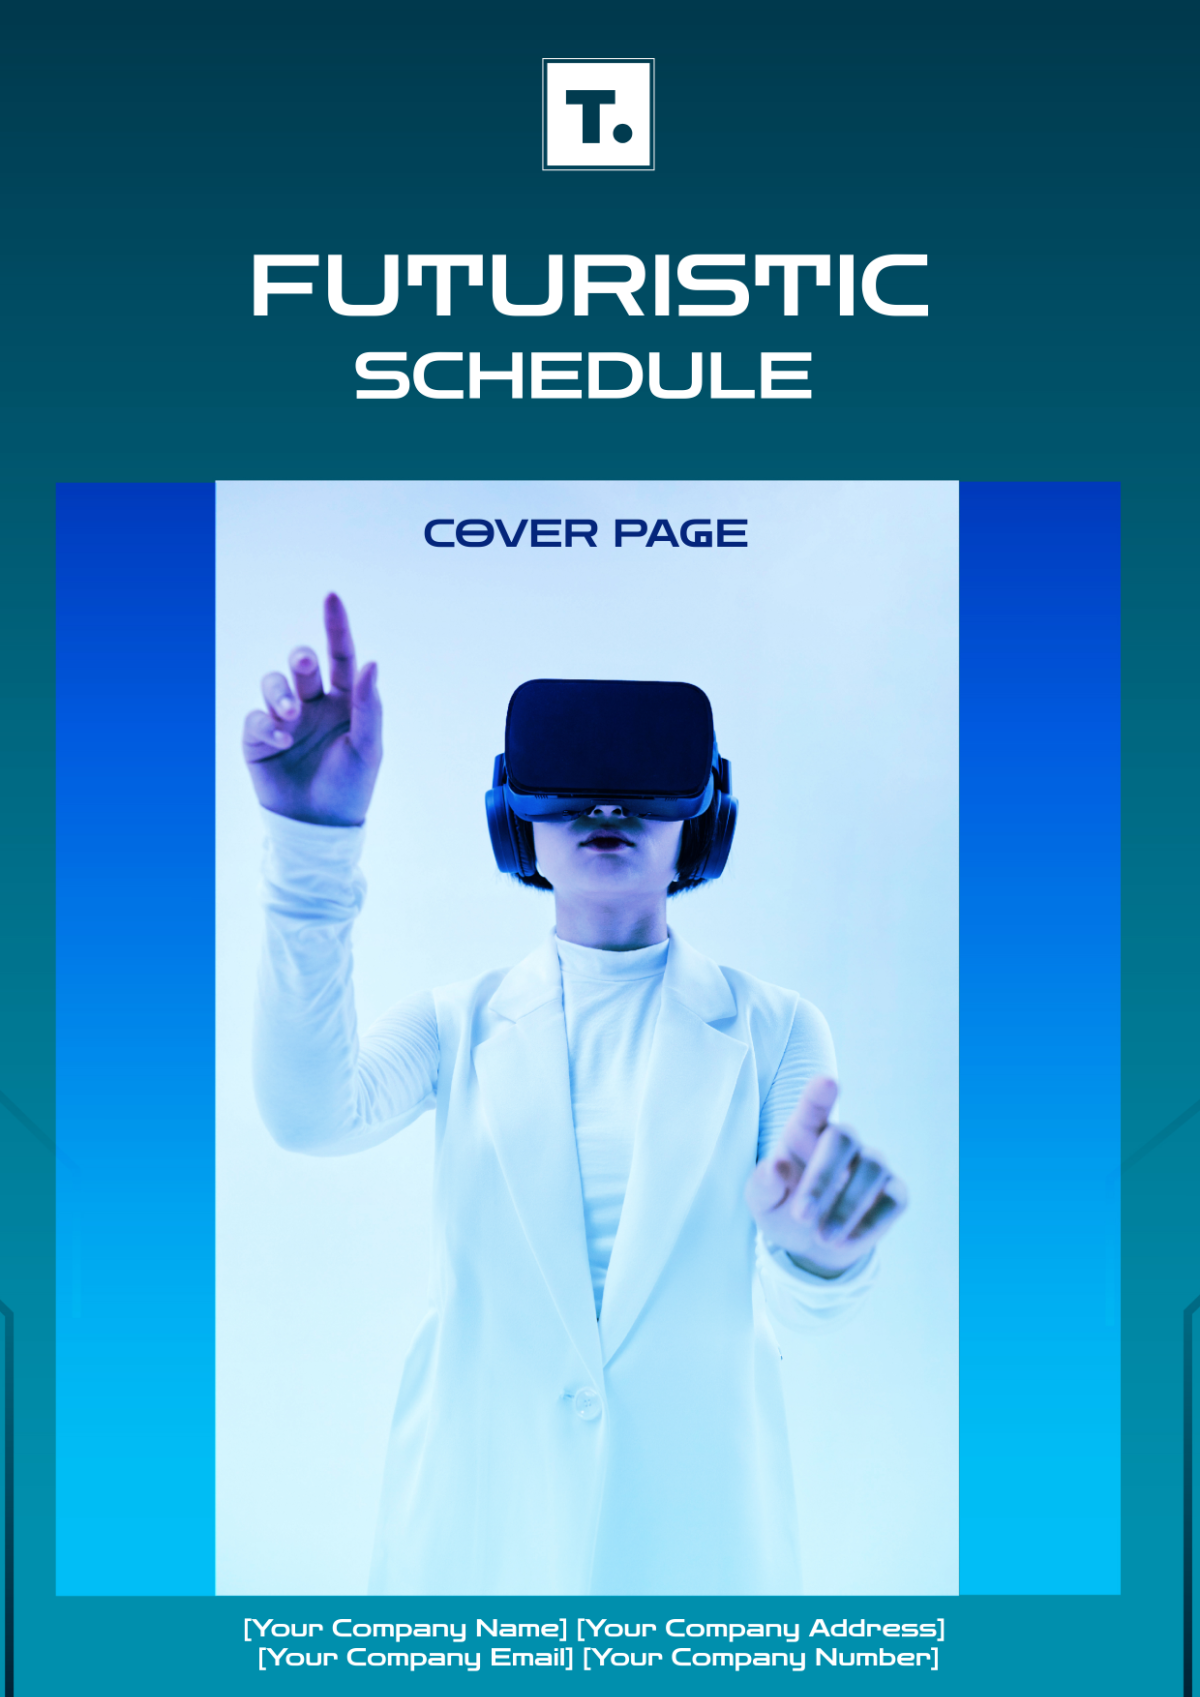 Futuristic Schedule Cover Page